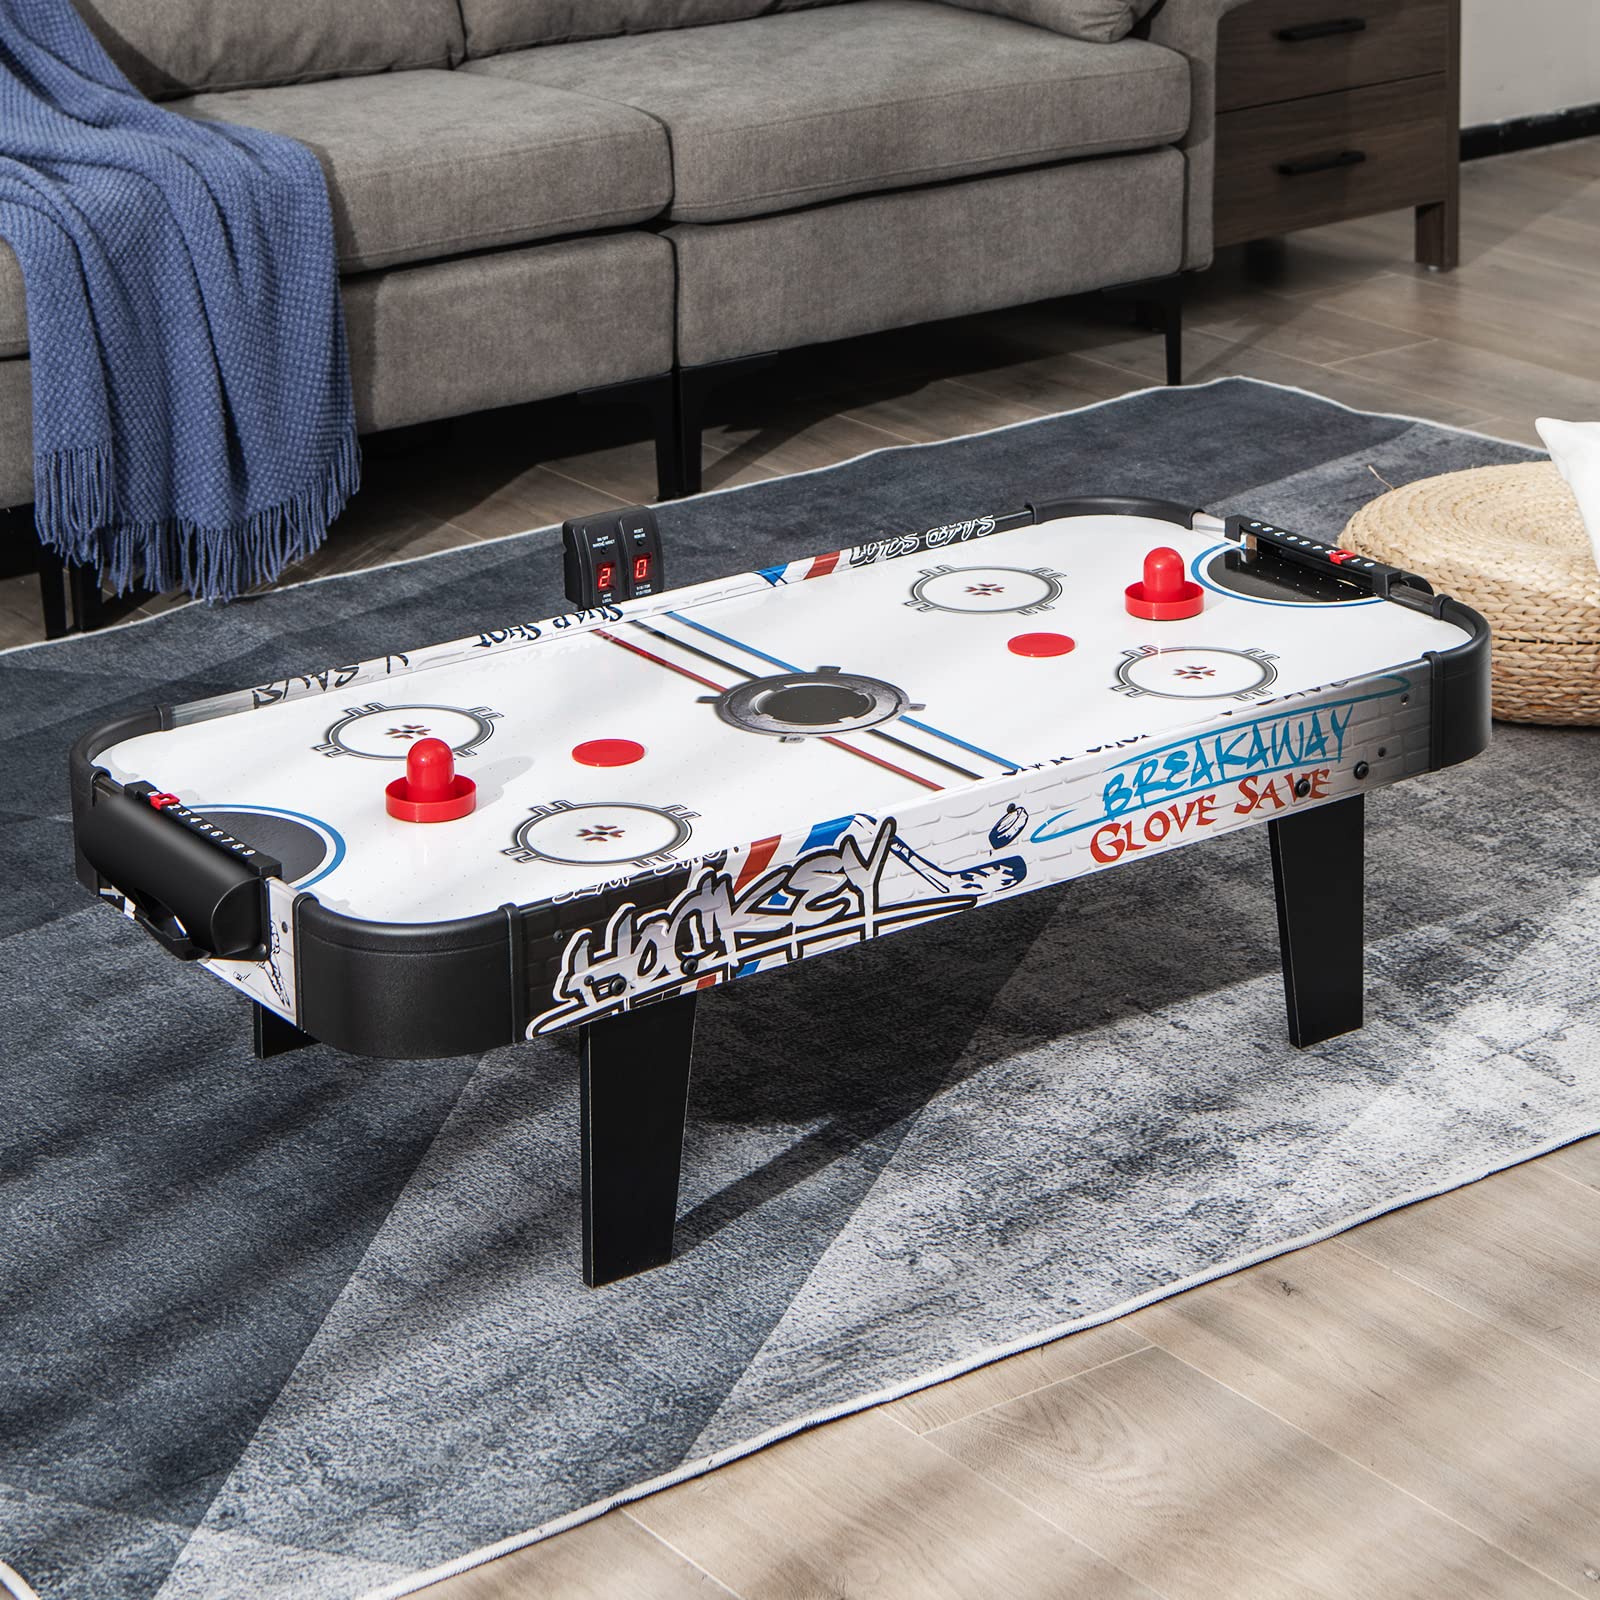 Giantex 42" Air Hockey Table, with 2 Pucks, 2 Pushers, LED Electronic Scoring